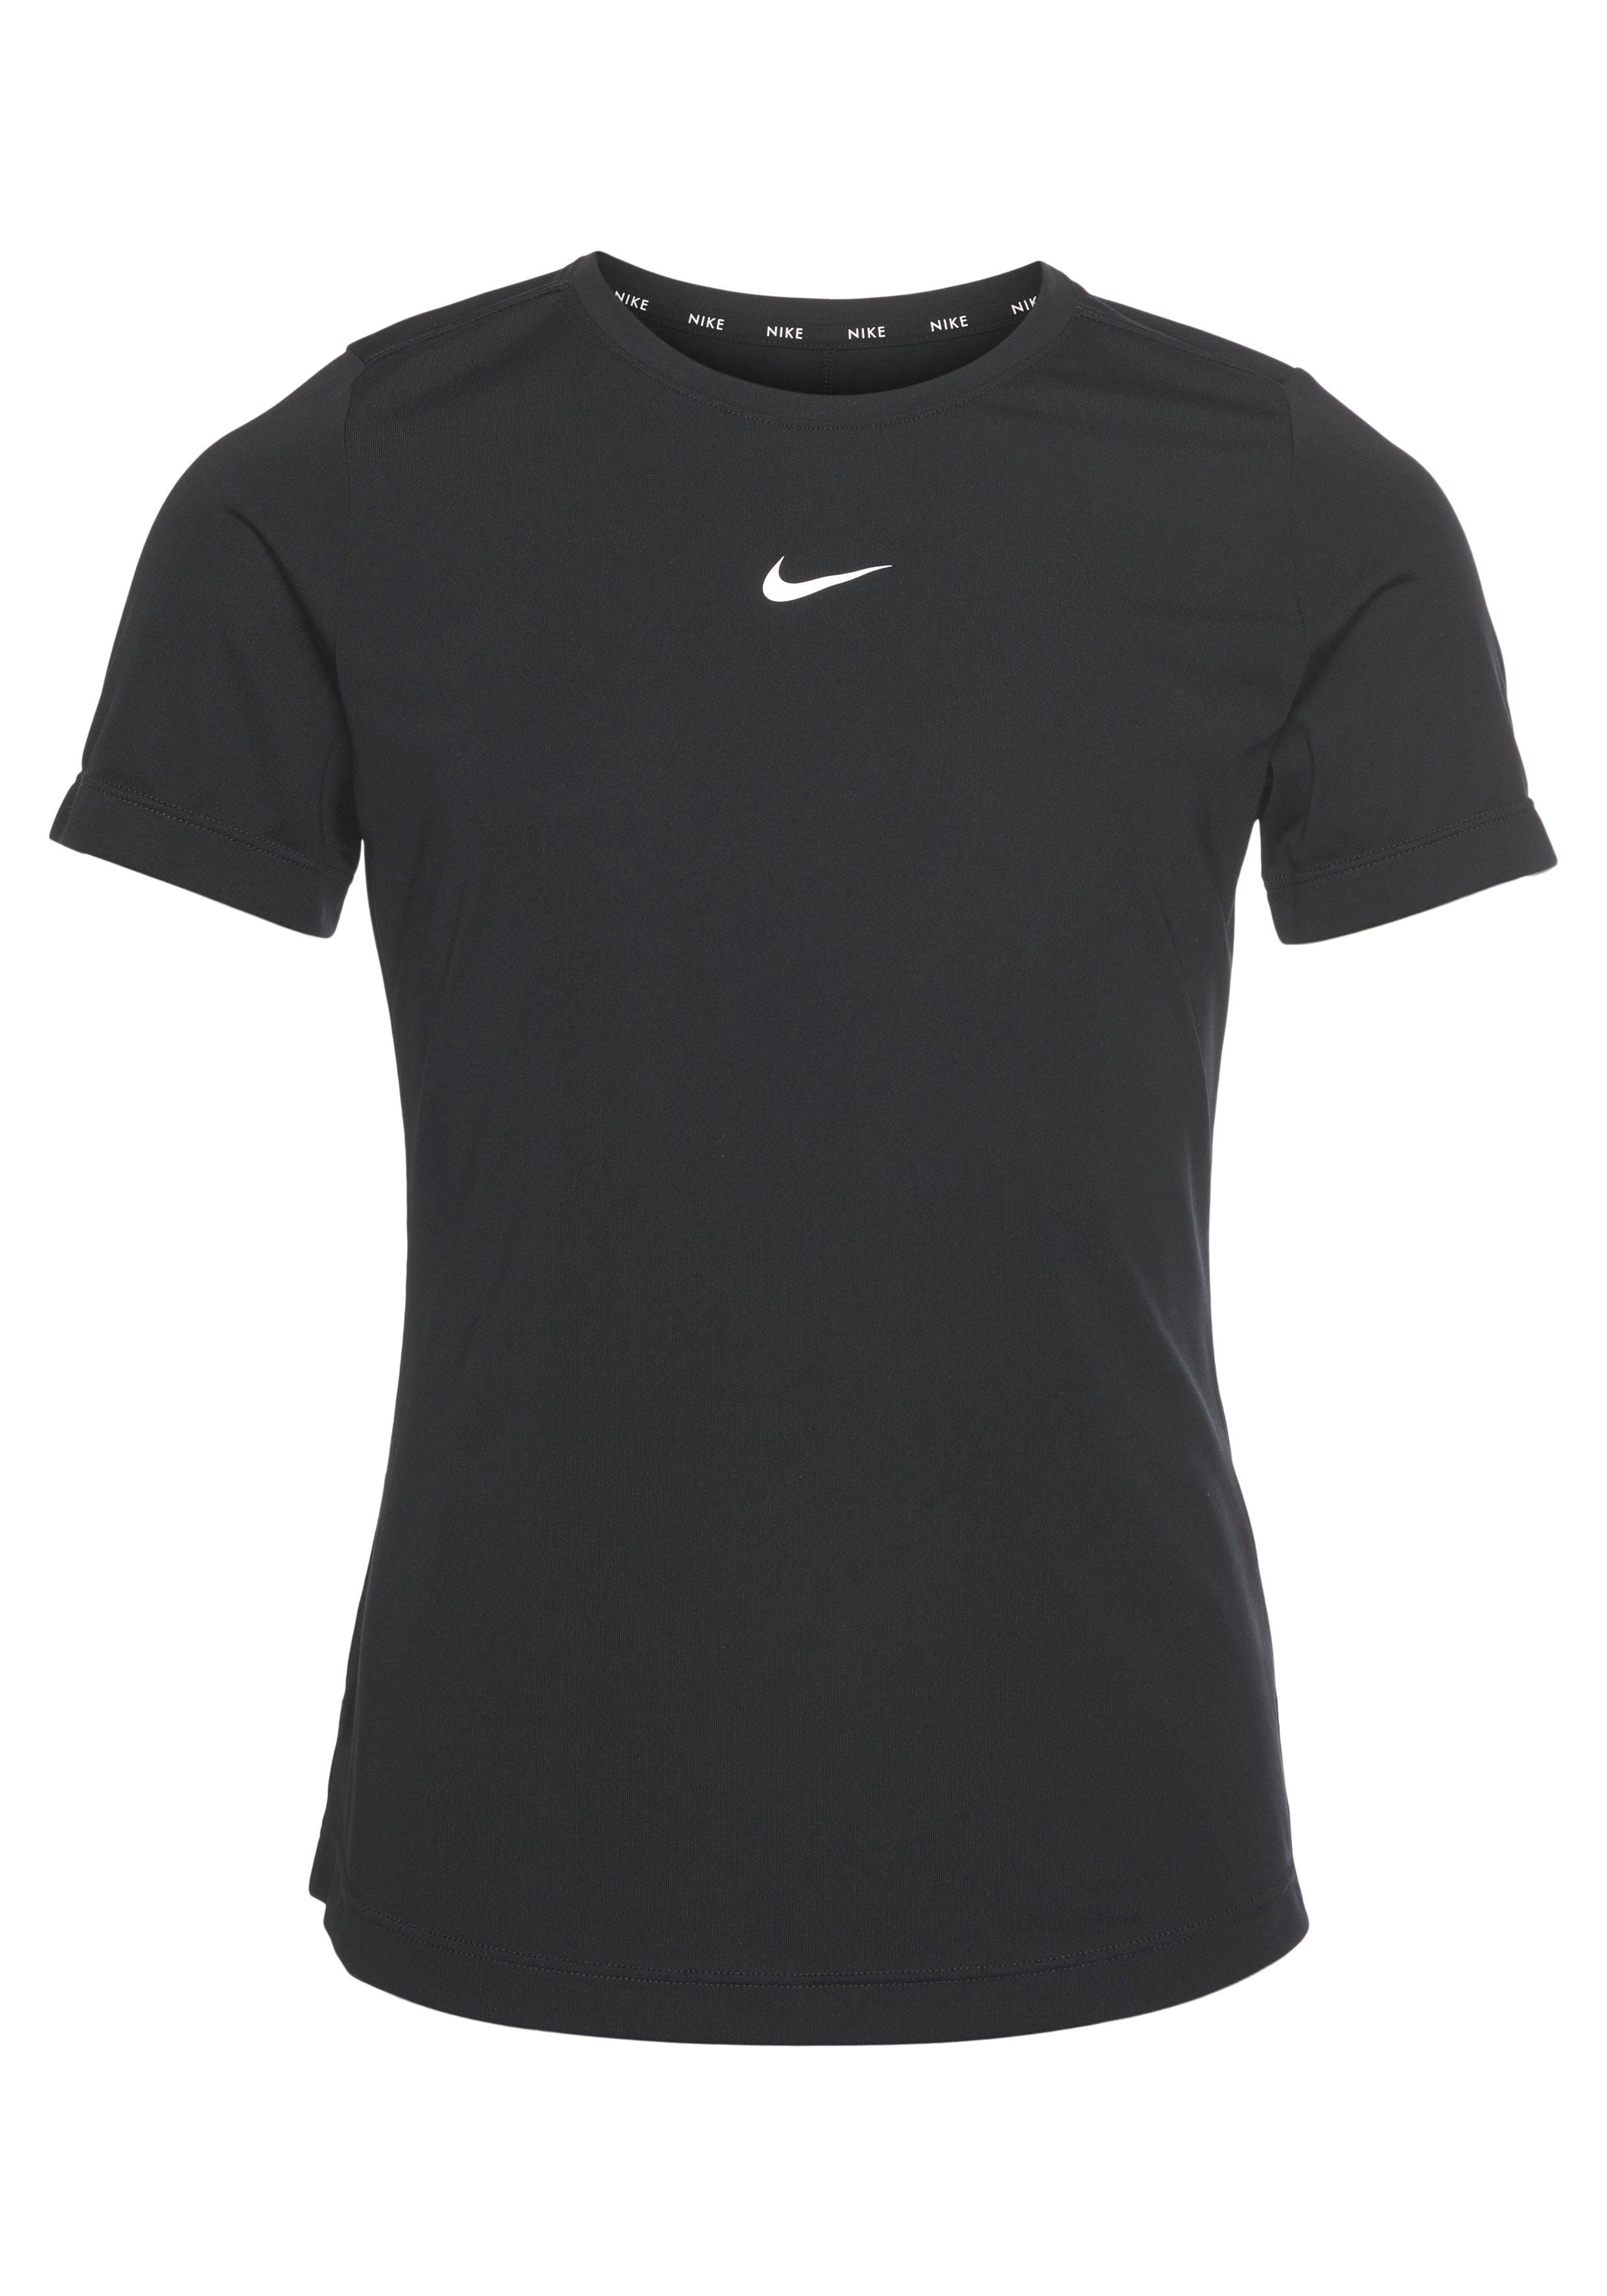 SHORT Nike SLEEVE Trainingsshirt ONE DRI-FIT GIRLS